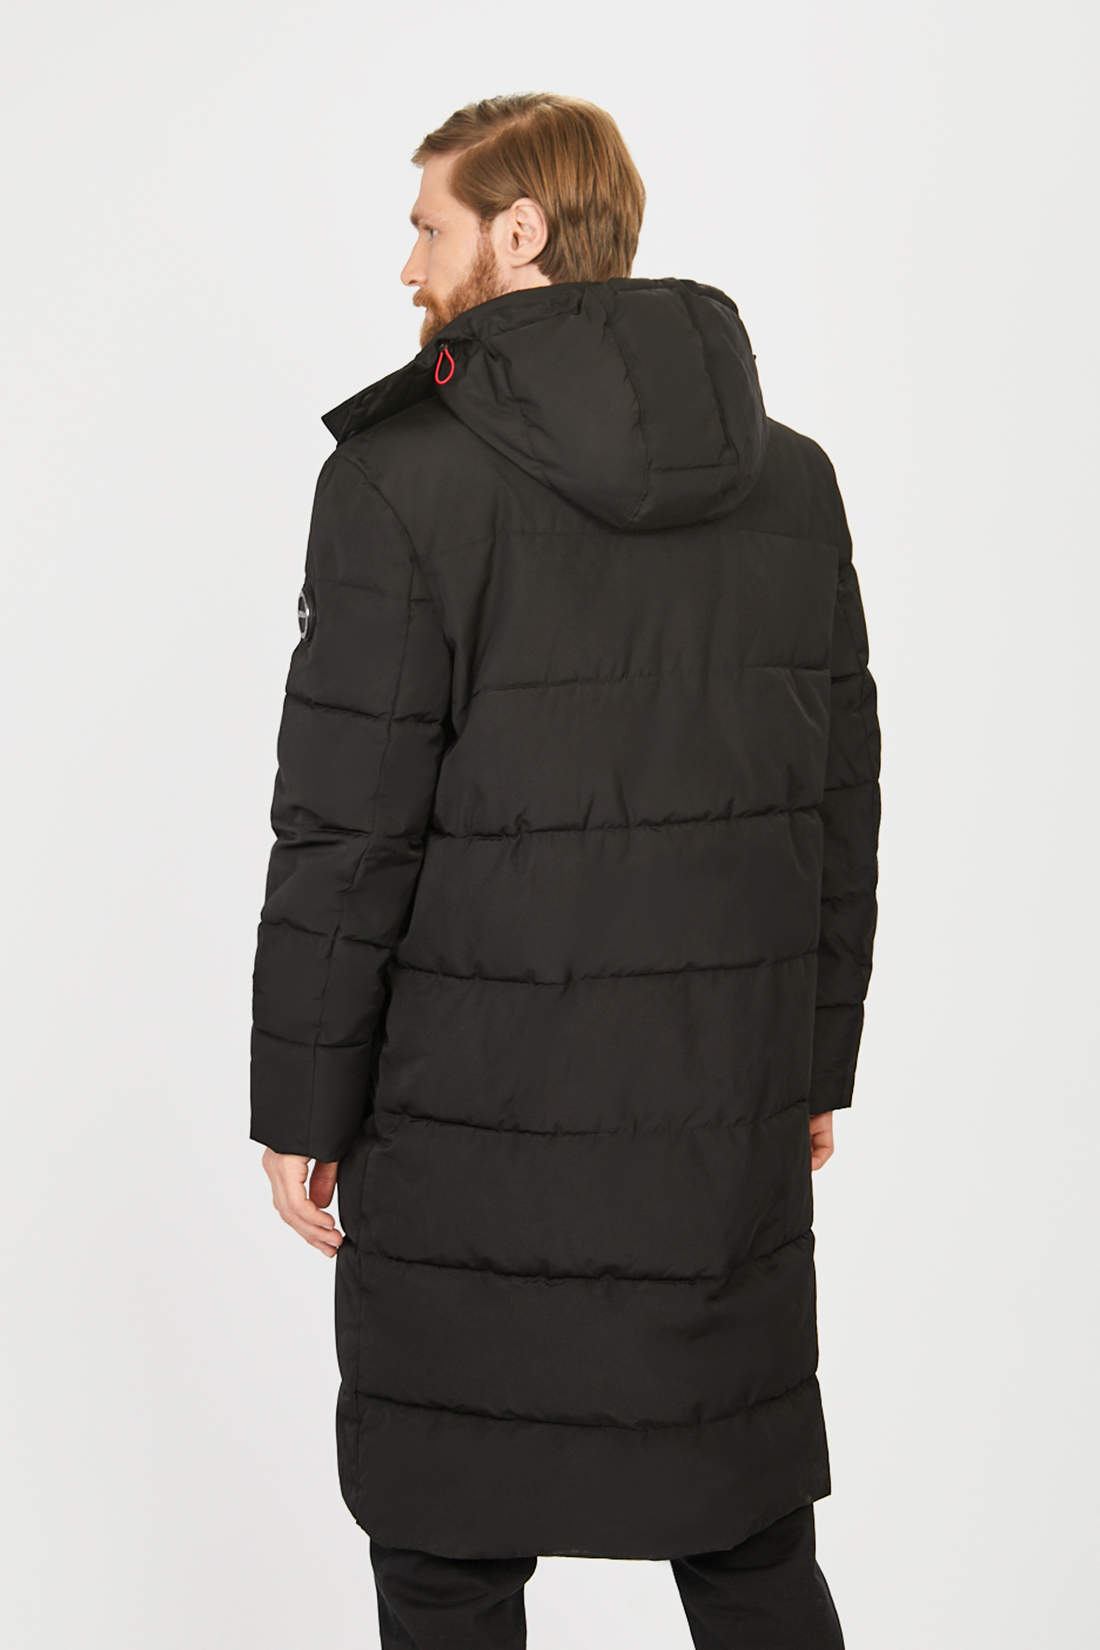 Куртка (Эко пух) (арт. baon B541506), размер S, цвет черный Куртка (Эко пух) (арт. baon B541506) - фото 2